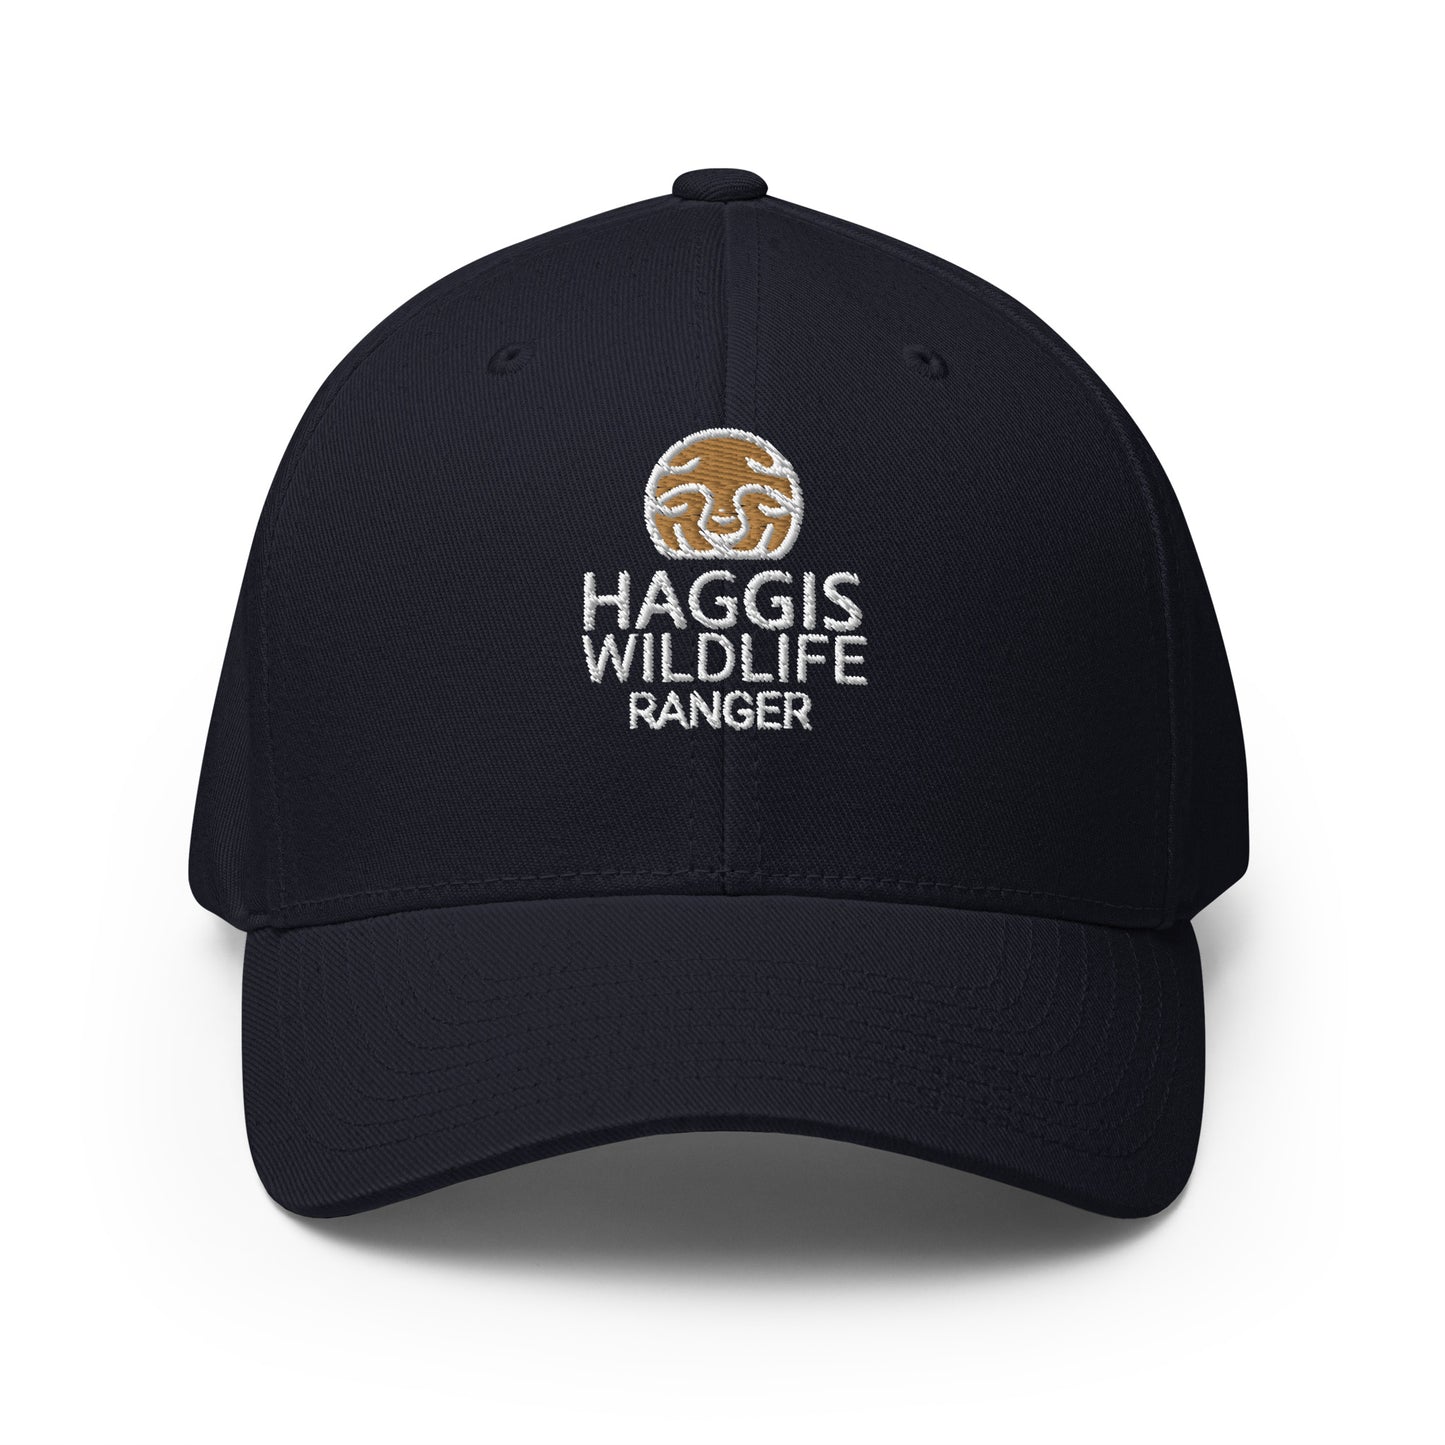 Haggis wildlife Ranger Structured Twill Cap